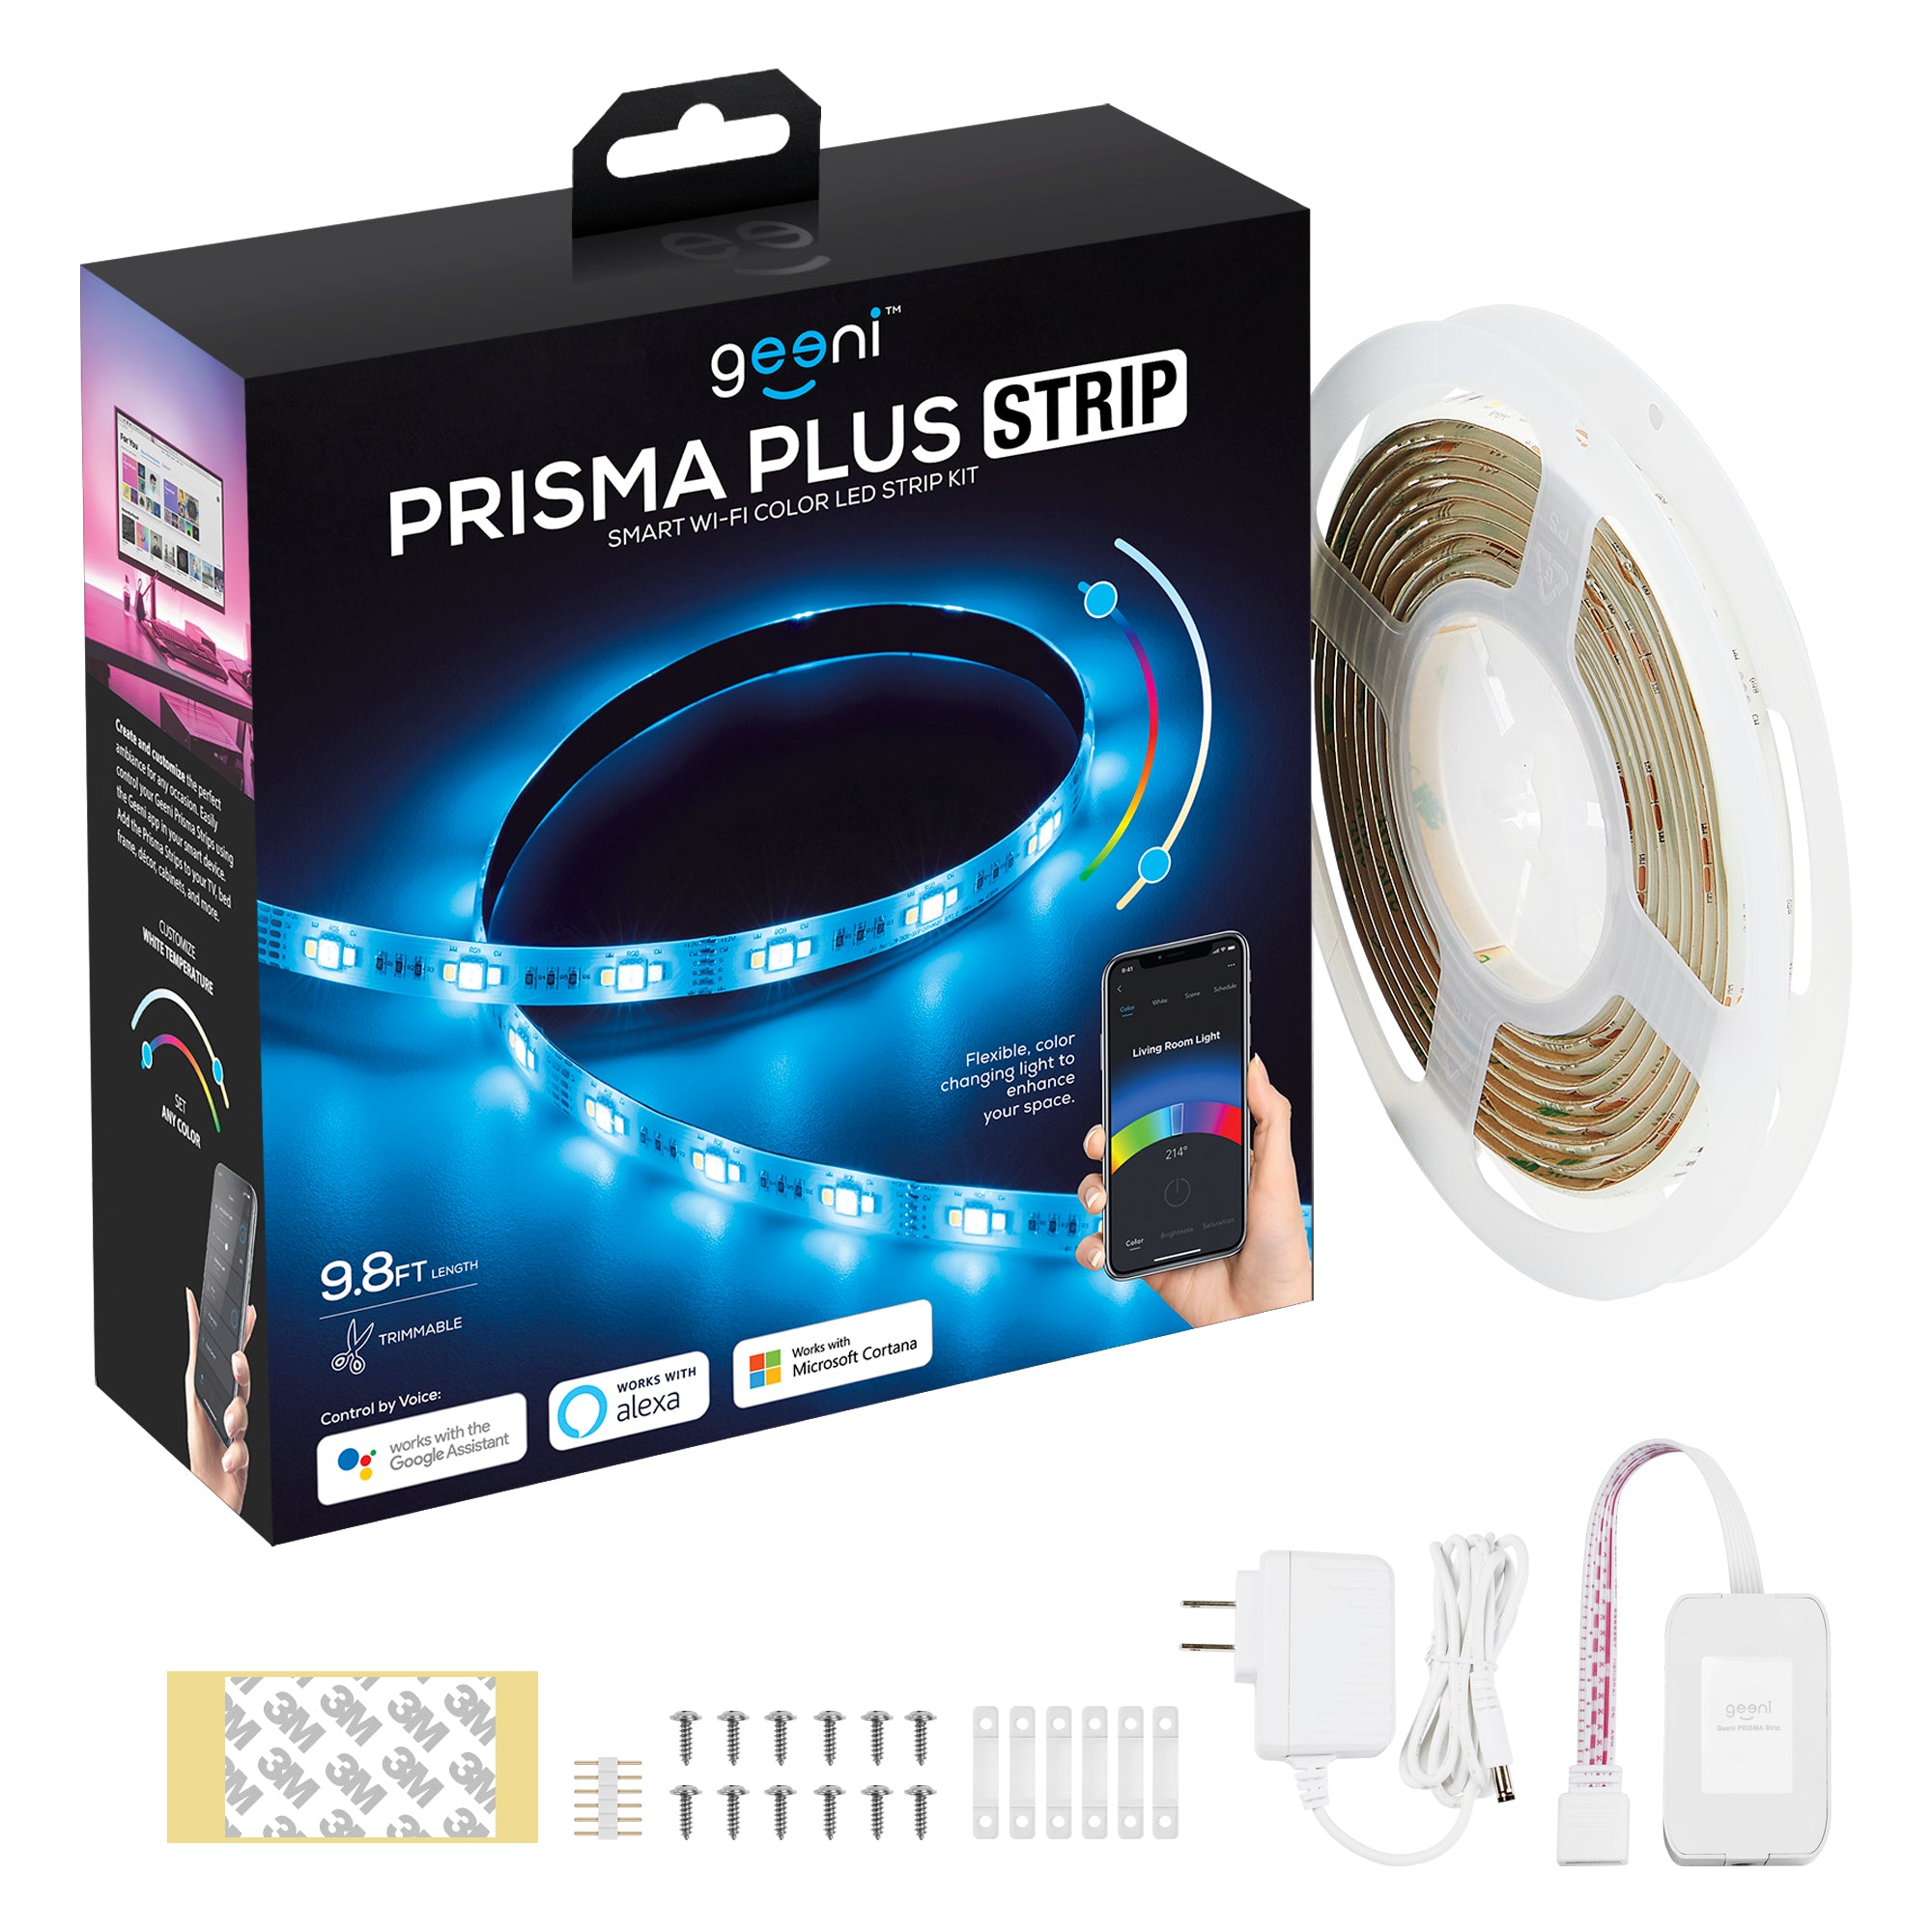 vrouwelijk Siësta Sport Geeni Prisma Plus Smart Wi-Fi LED Light Strip Kit, 9.8 ft. – Geeni Smarthome